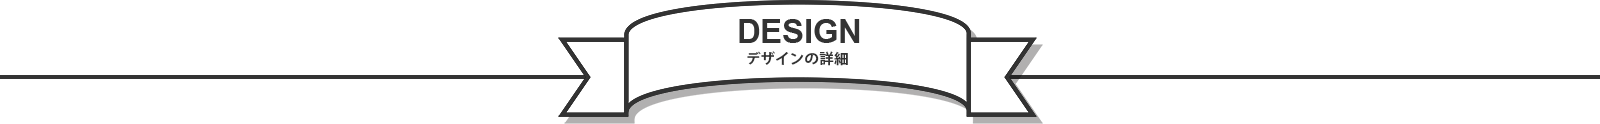 DESIGN デザインの詳細